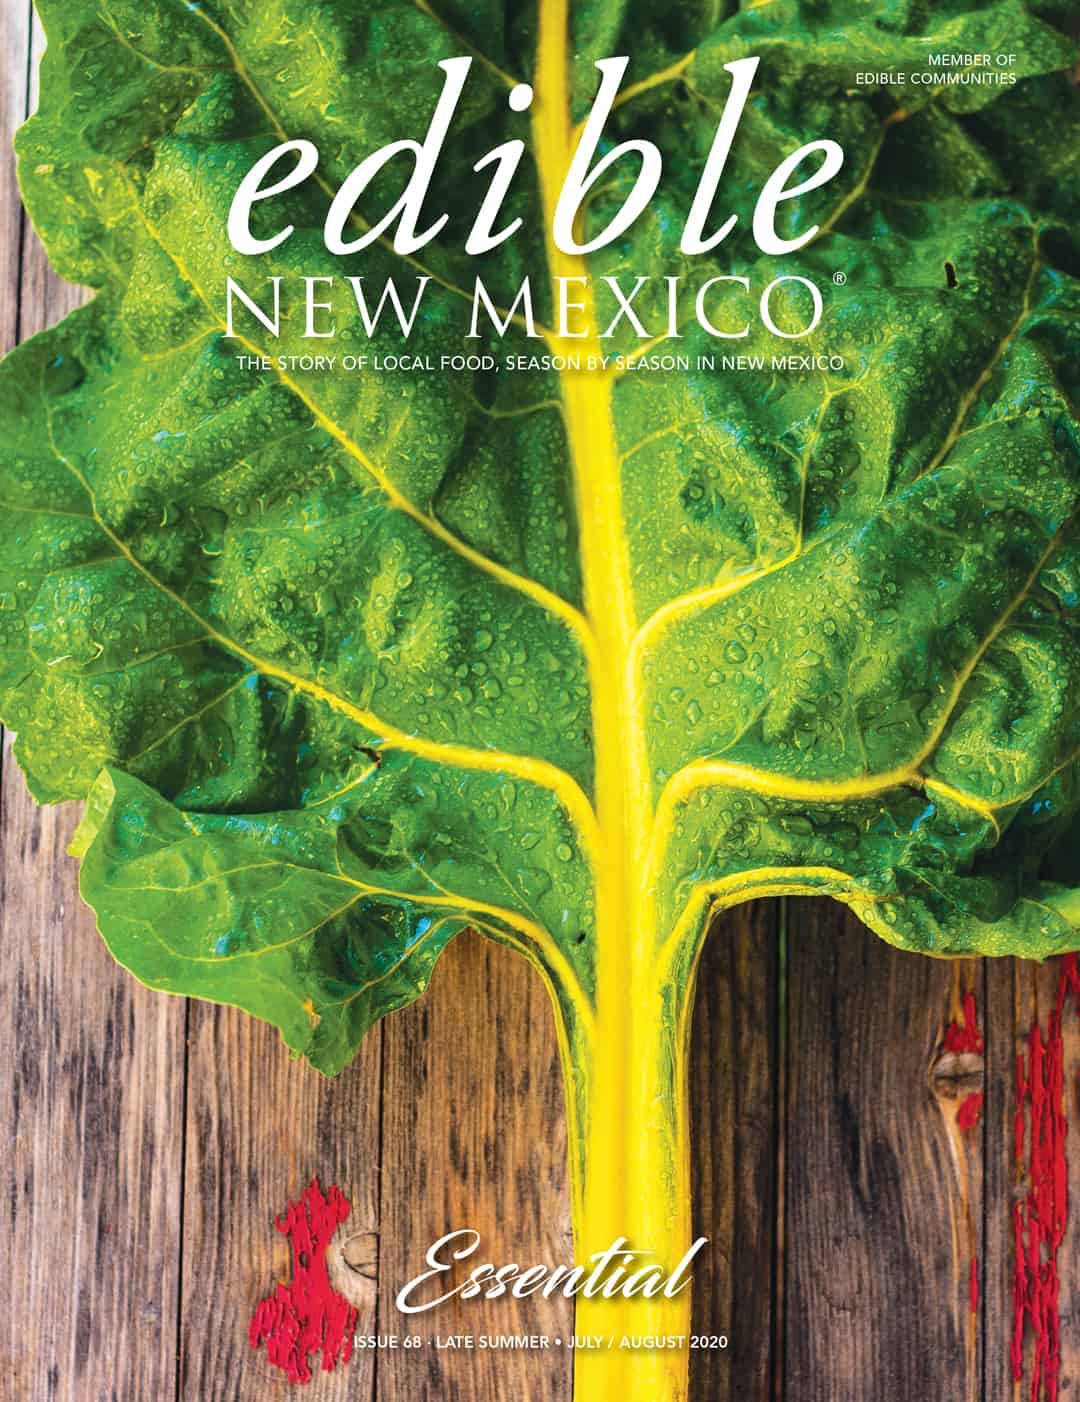 Taste of Clay - Edible New Mexico